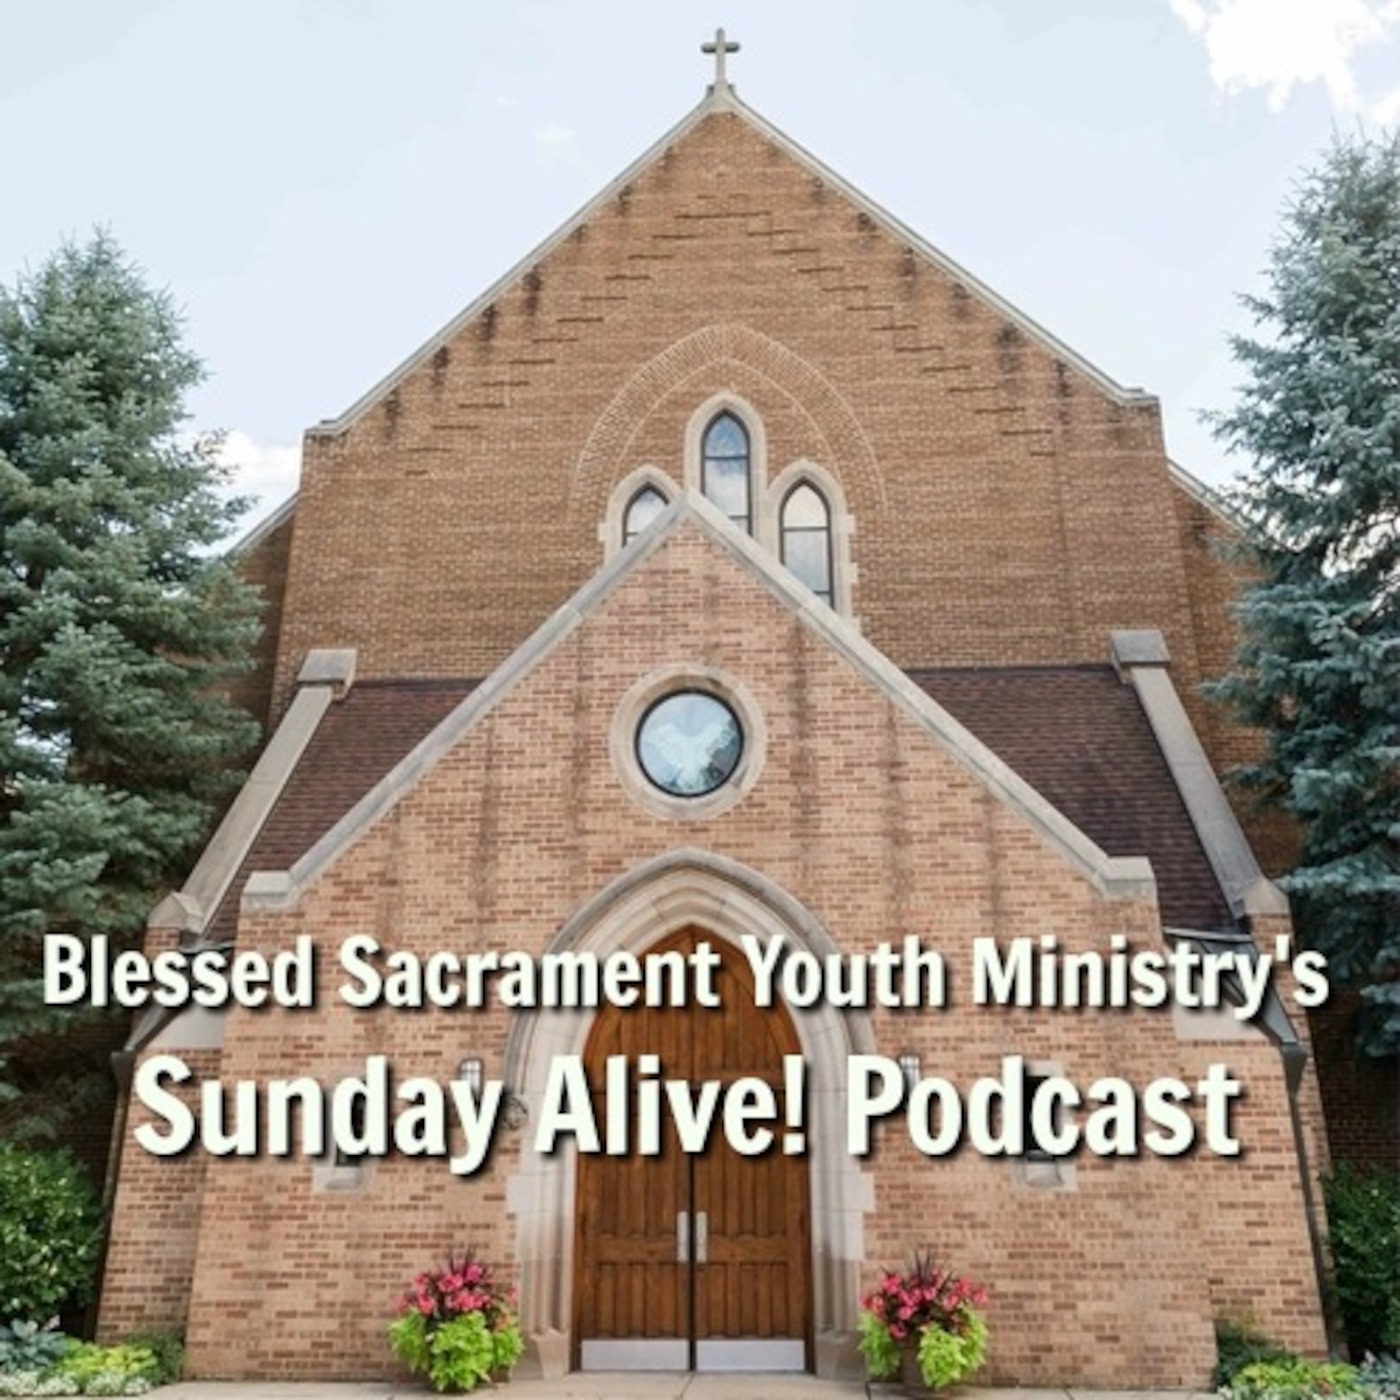 The Sunday Alive Podcast - Sunday, May 24, 2020 - Ascension Sunday